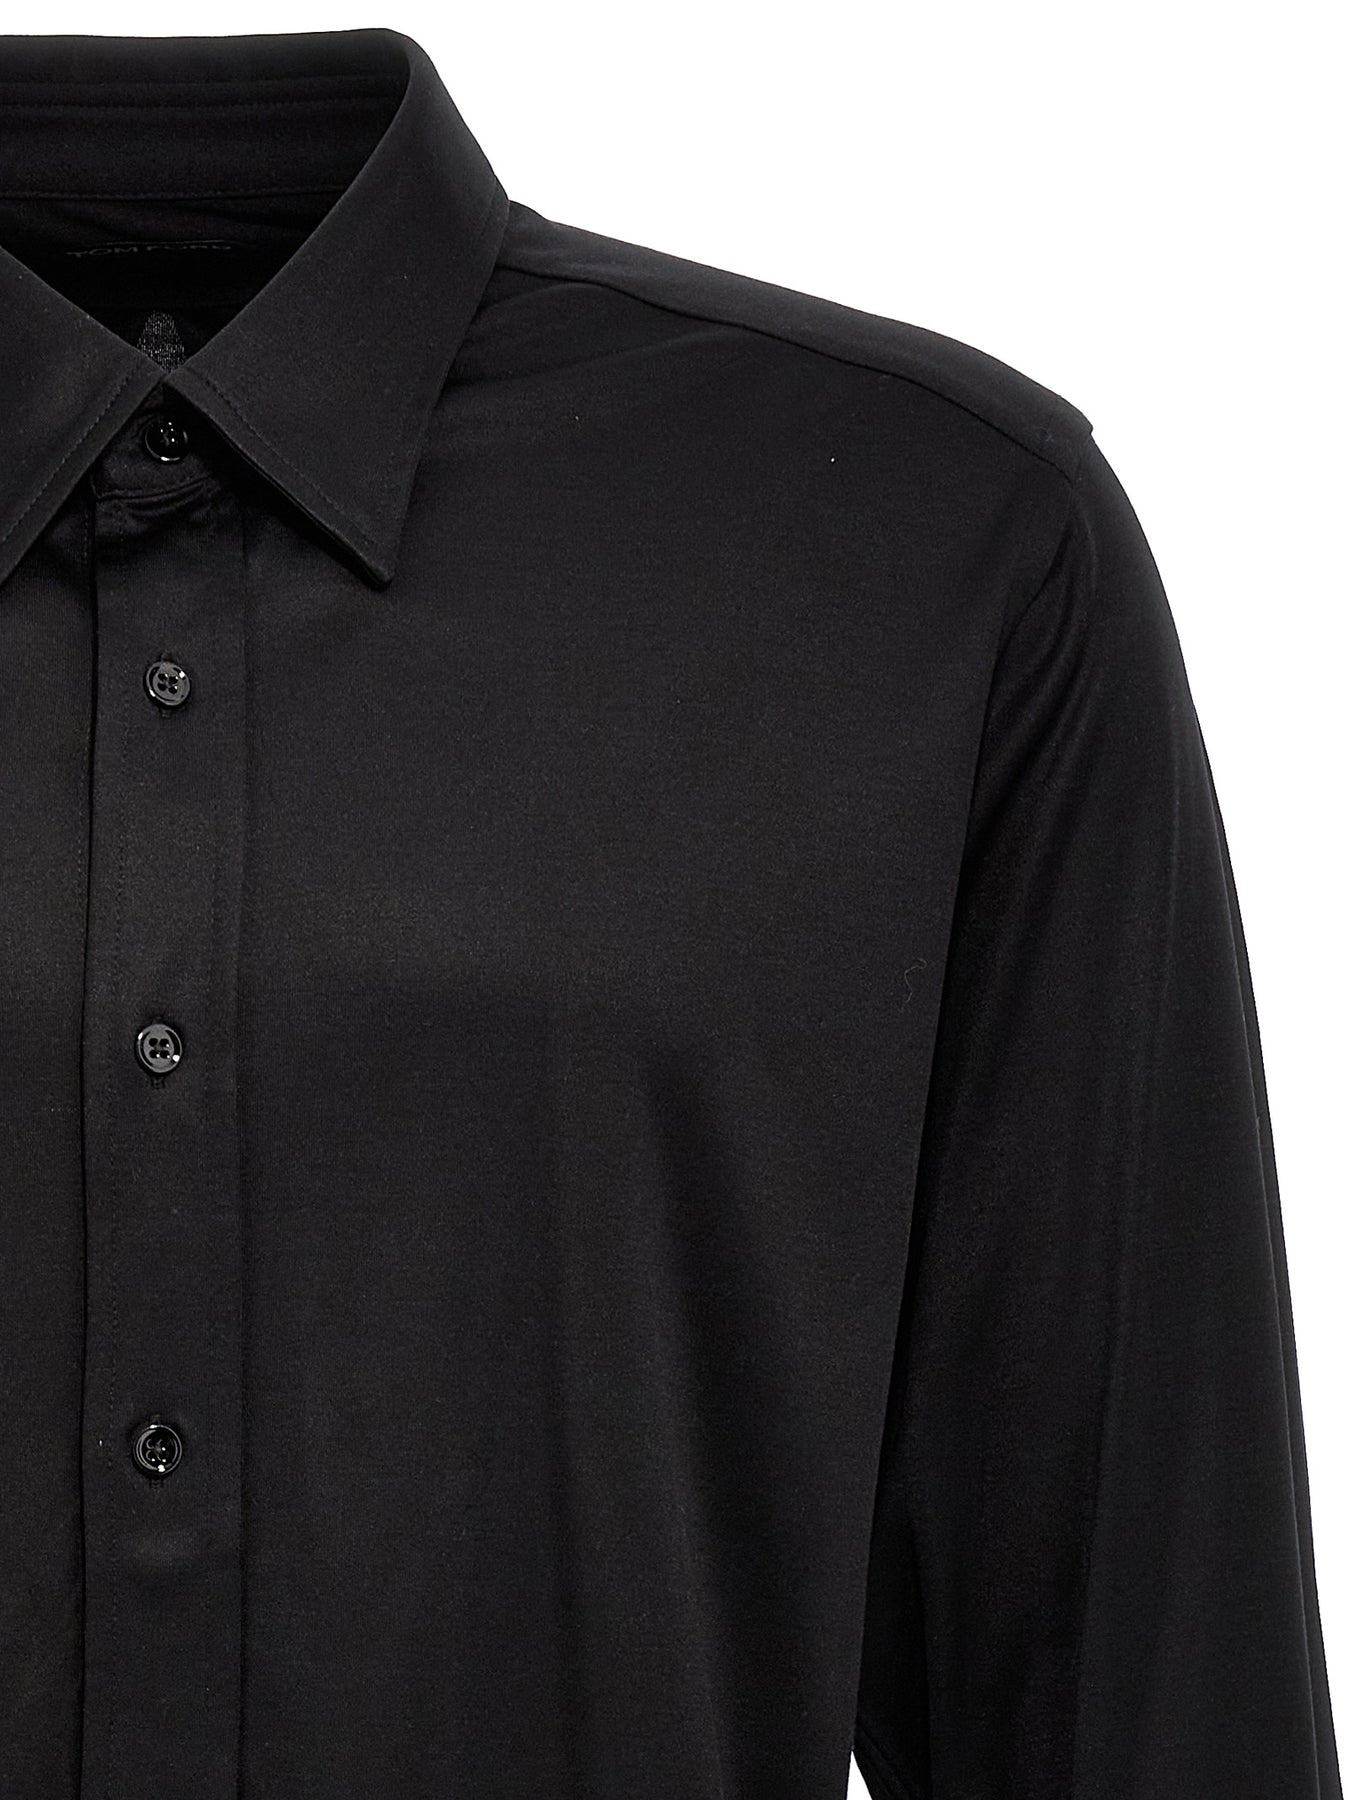 Silk Shirt Shirt, Blouse Black - 3